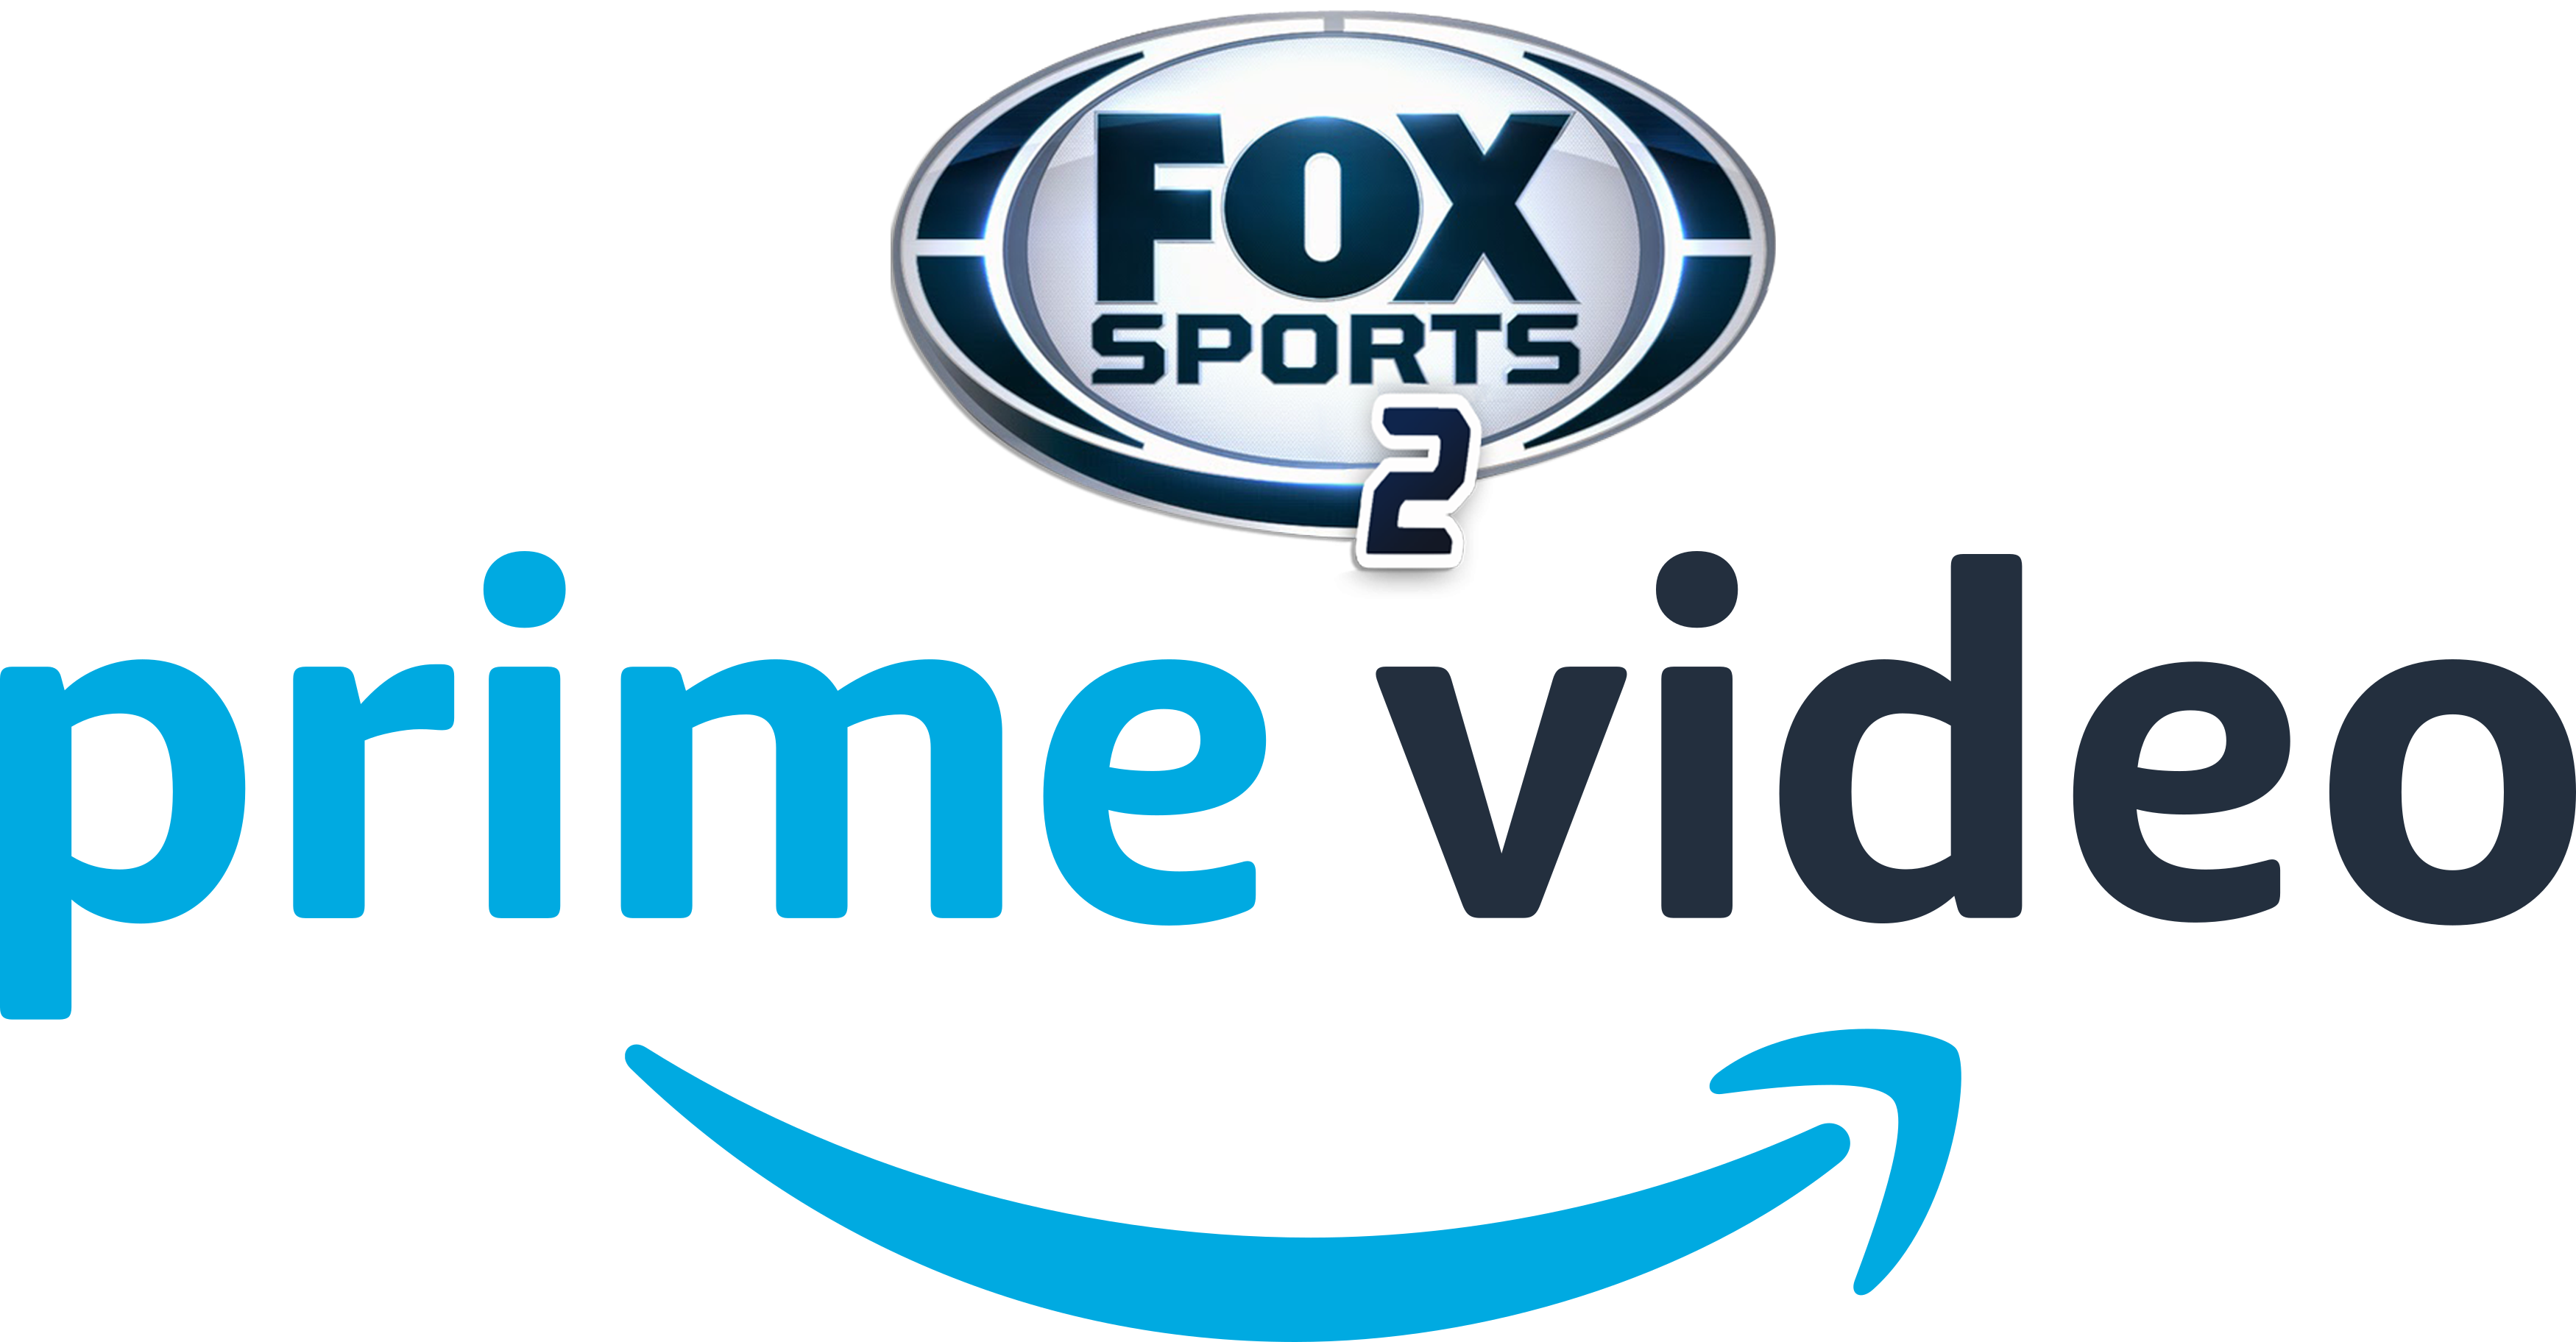 Fox Sports 2 | Prime Video